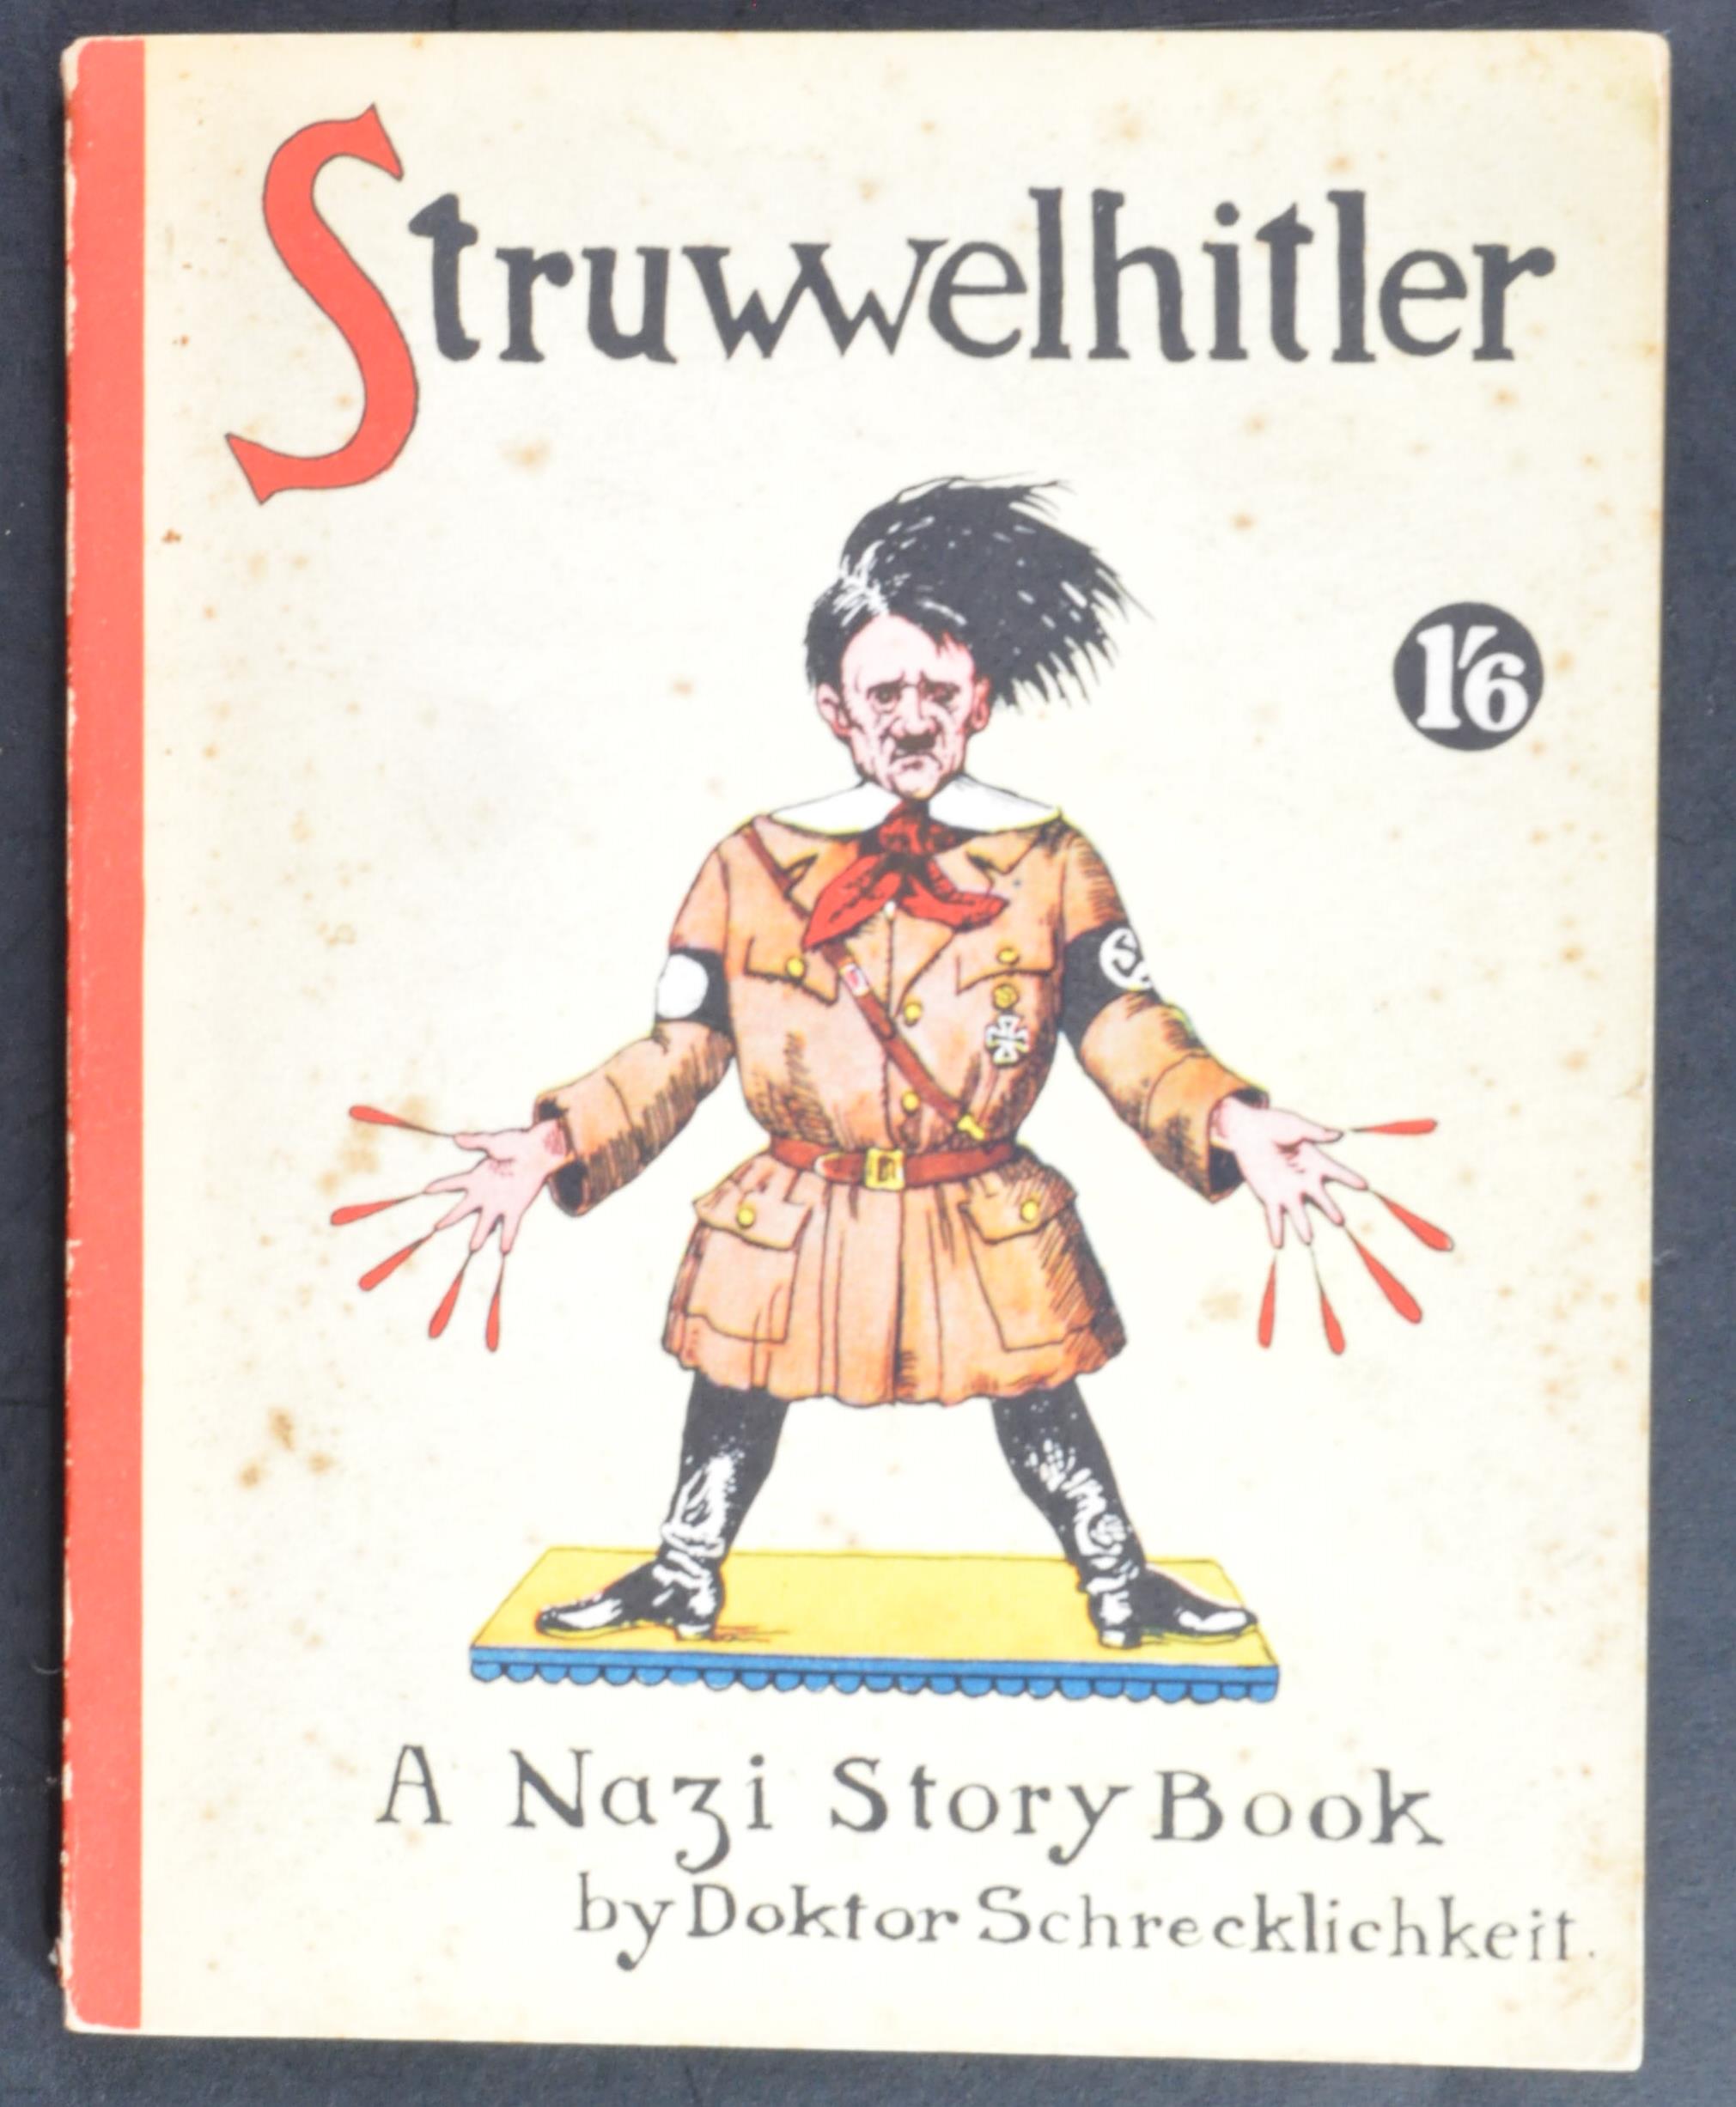 SCARCE WWII STRUWWELHITLER NAZI STORY BOOK C1939 - Image 2 of 5